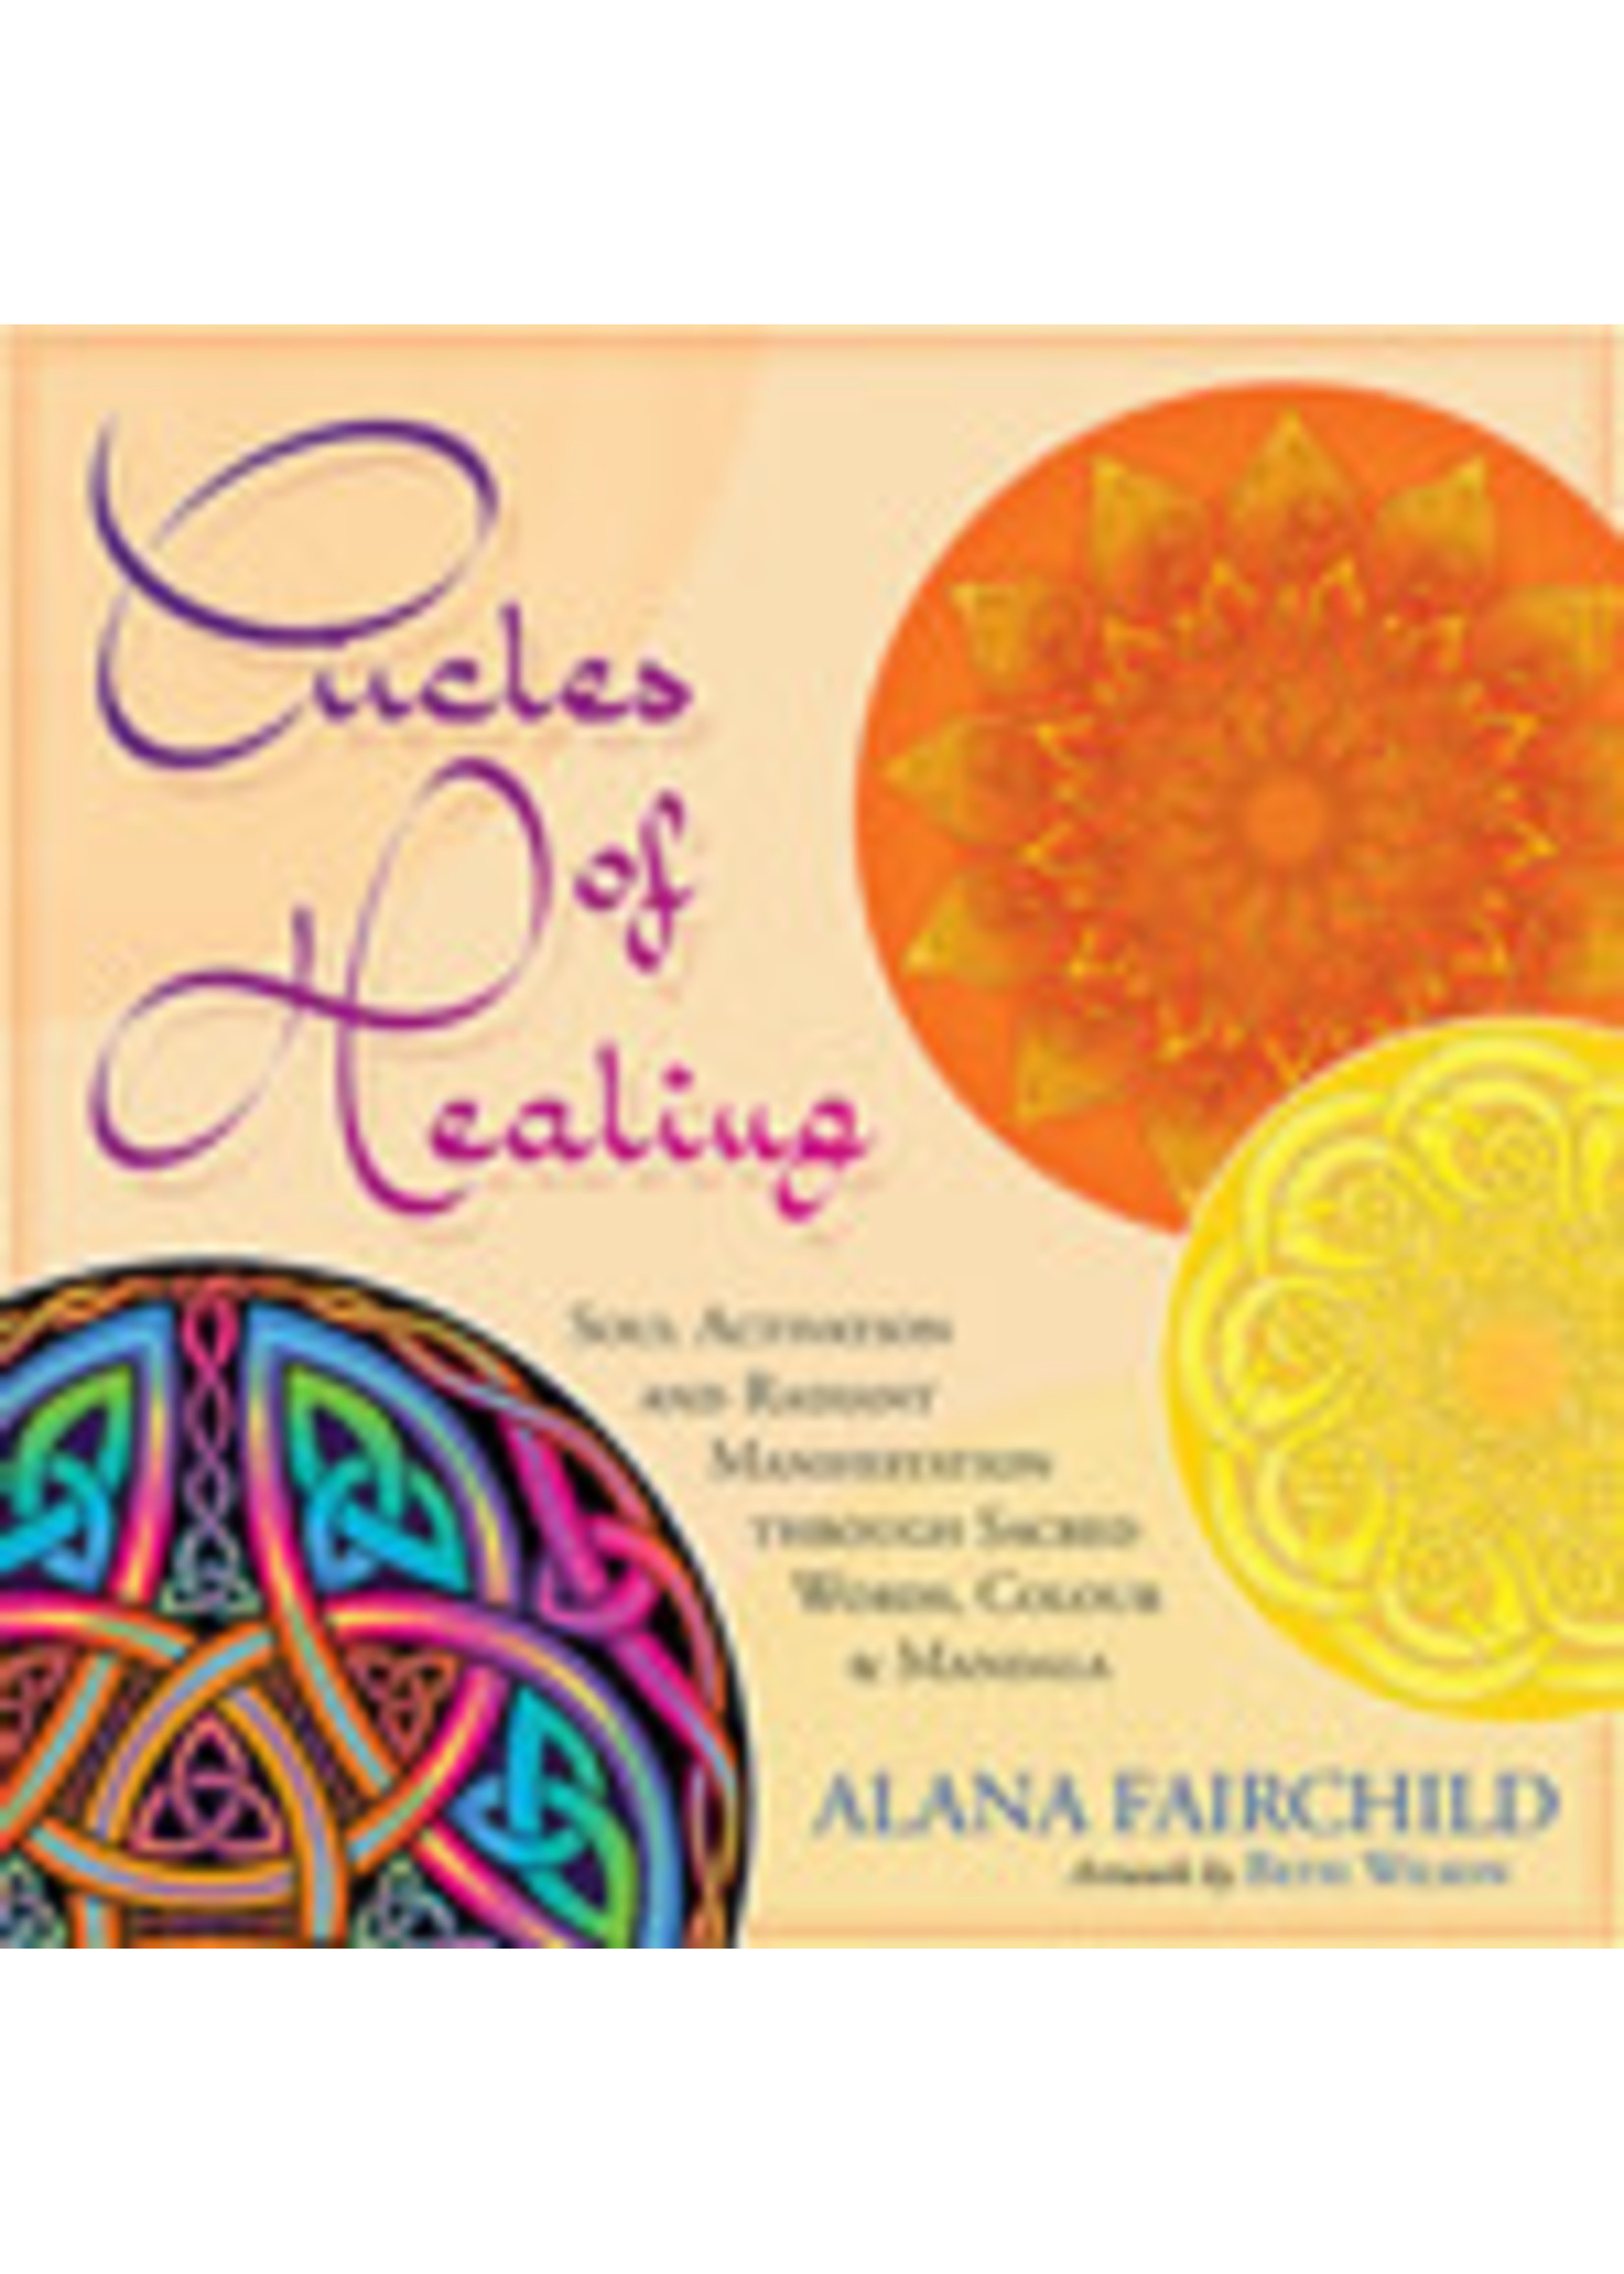 Circles of Healing